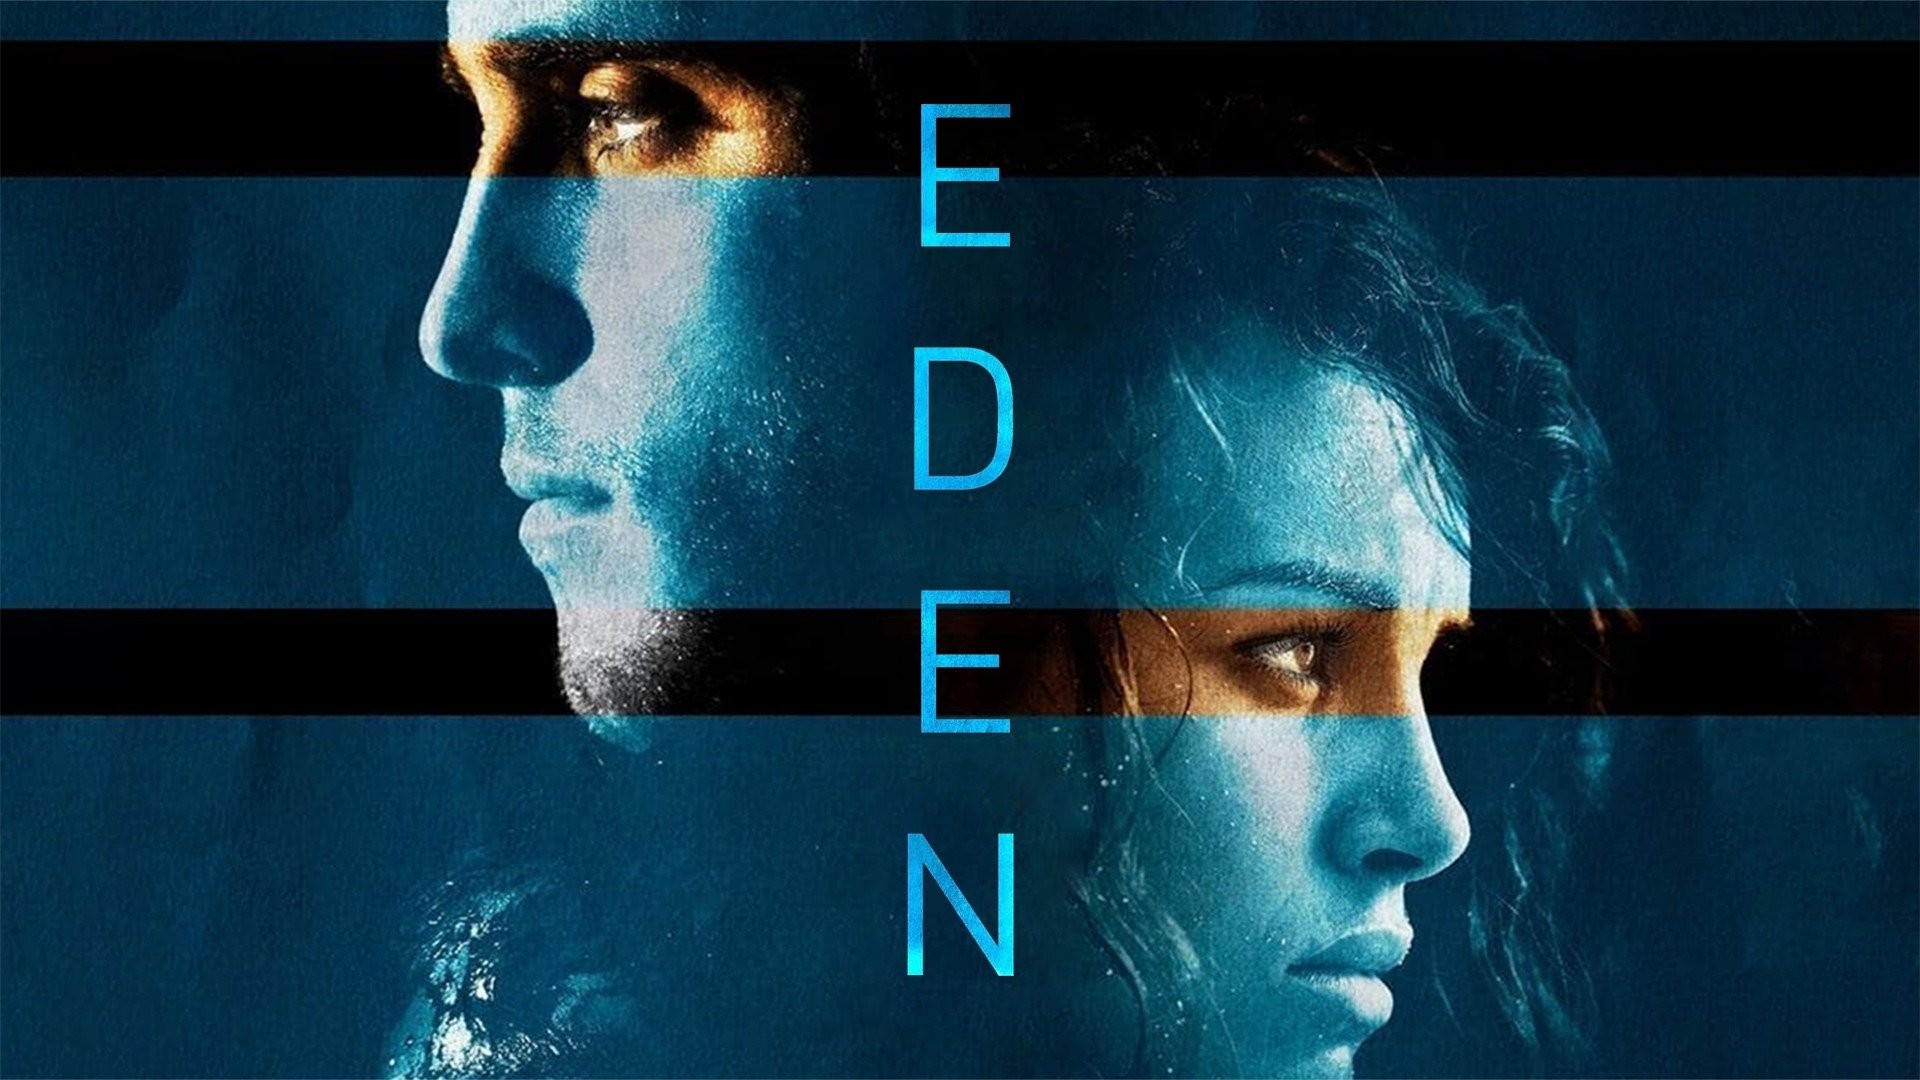 Edens Zero - Rotten Tomatoes